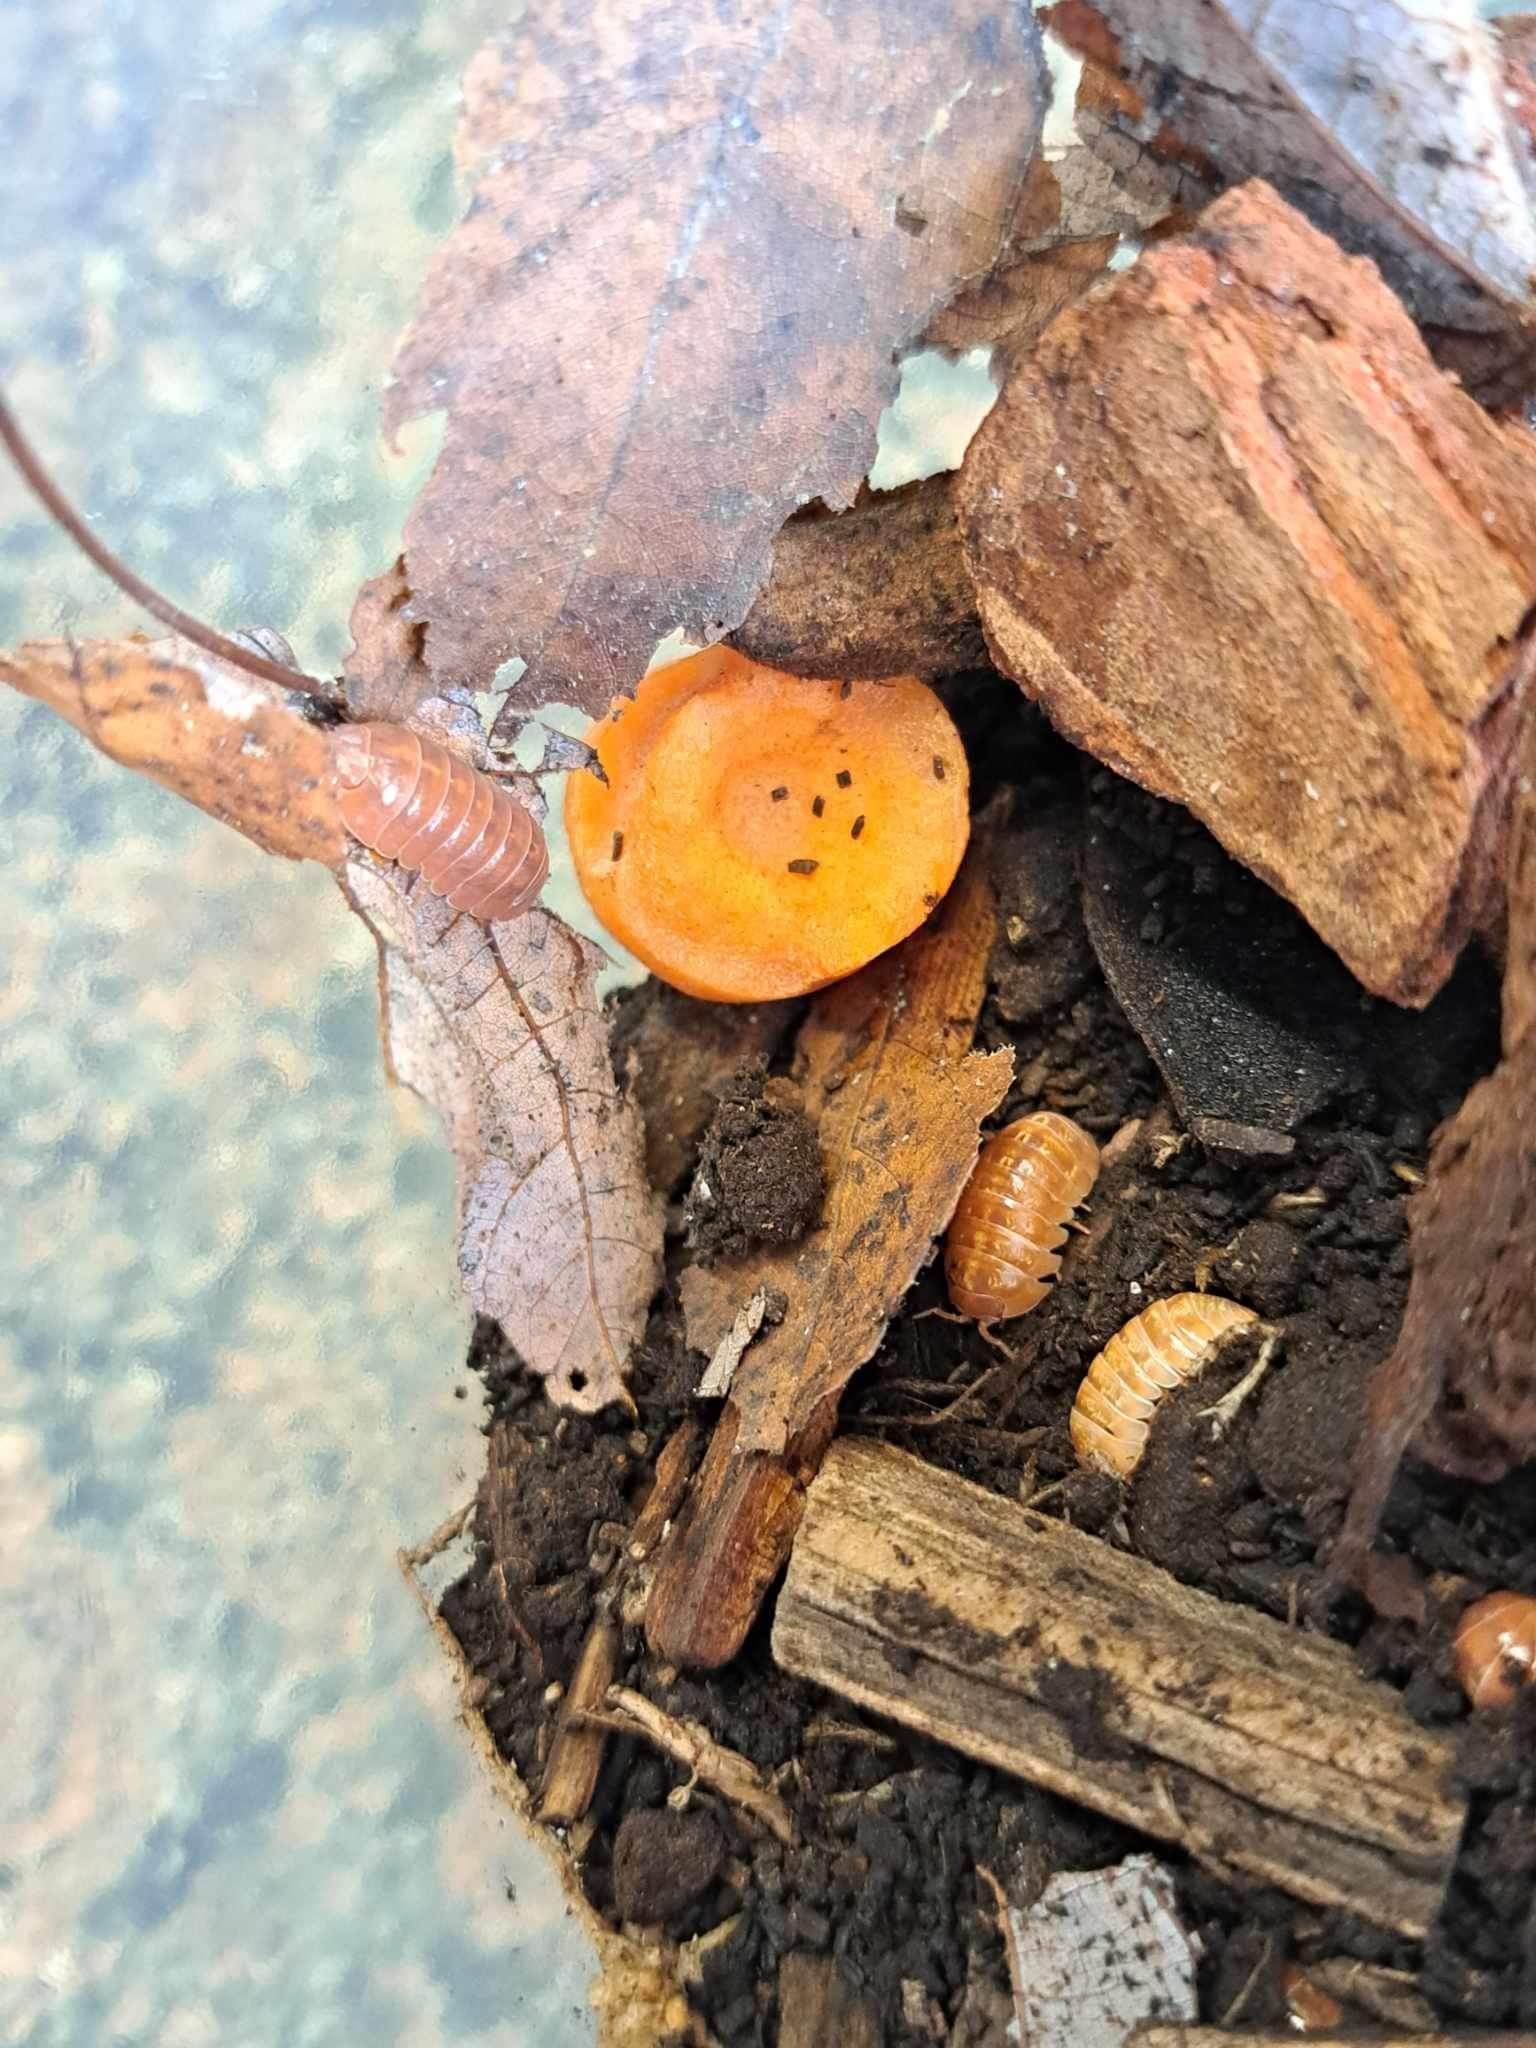 La Swamp Woodhouse Culture-Isopods   A. Vulgare Tangerine 15+